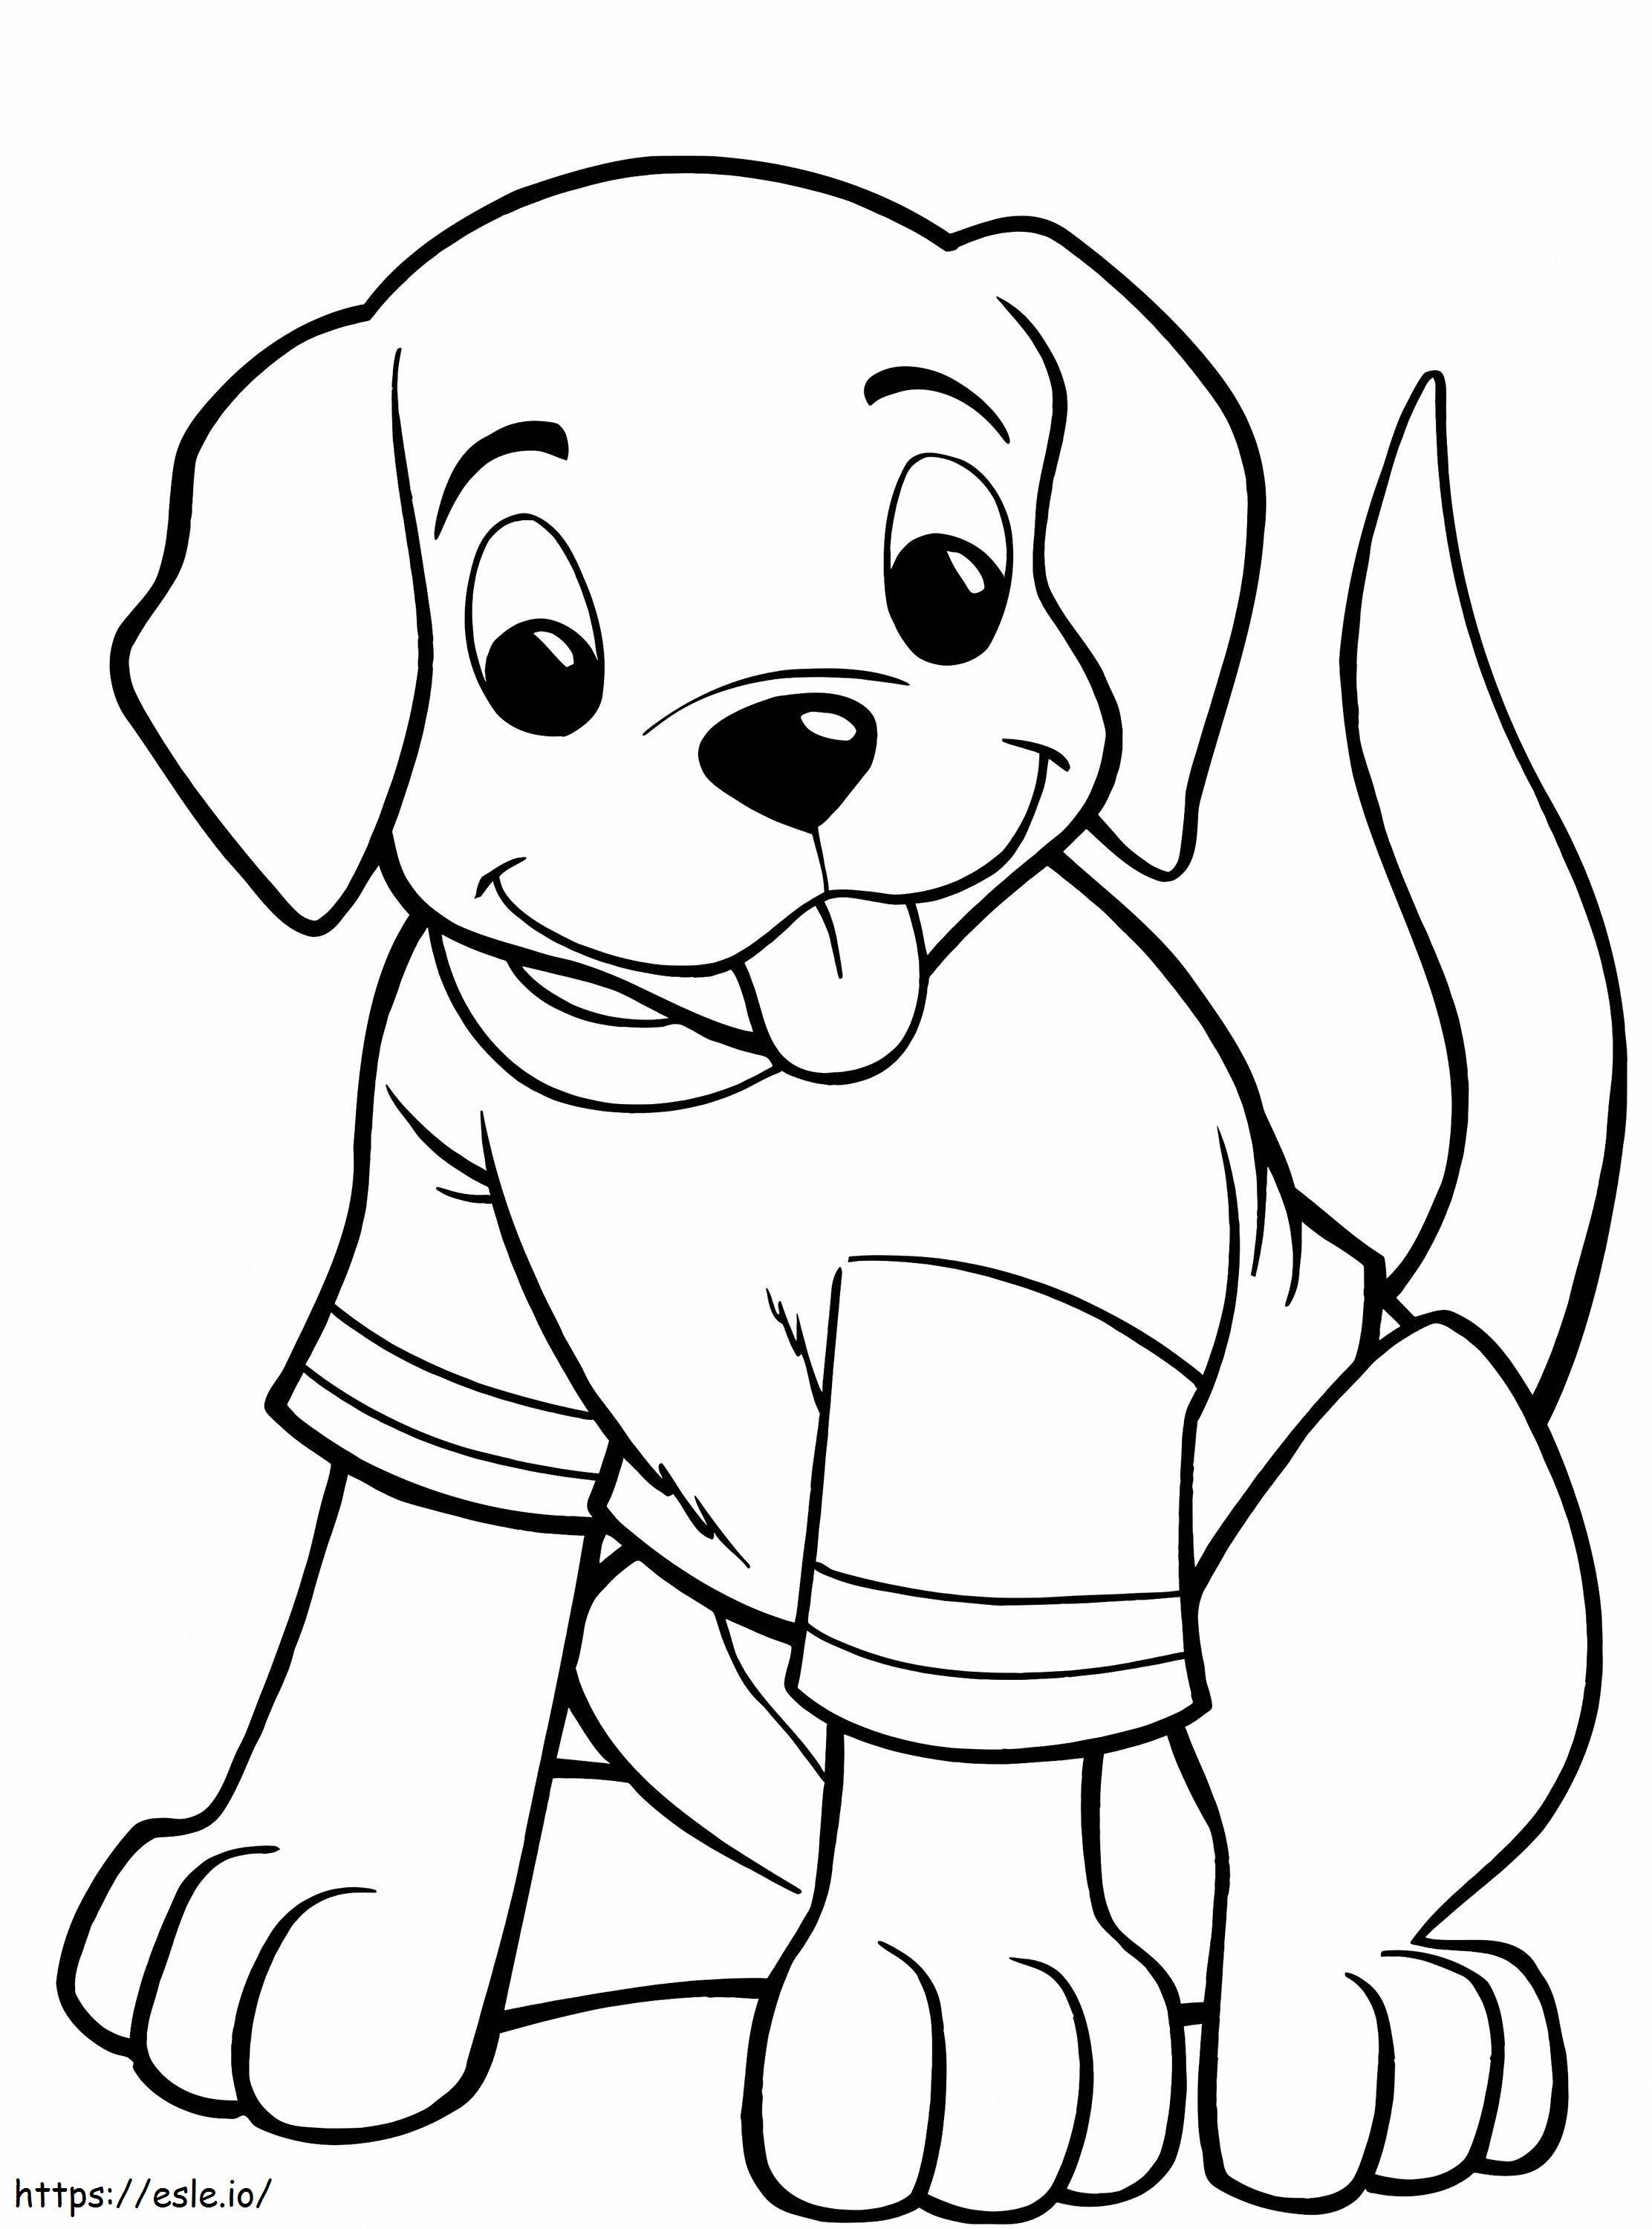 Coloriage _Useful Cute Cartoon Puppy Unique Print Pictures To Through Puppies Sheet 759X1024 à imprimer dessin